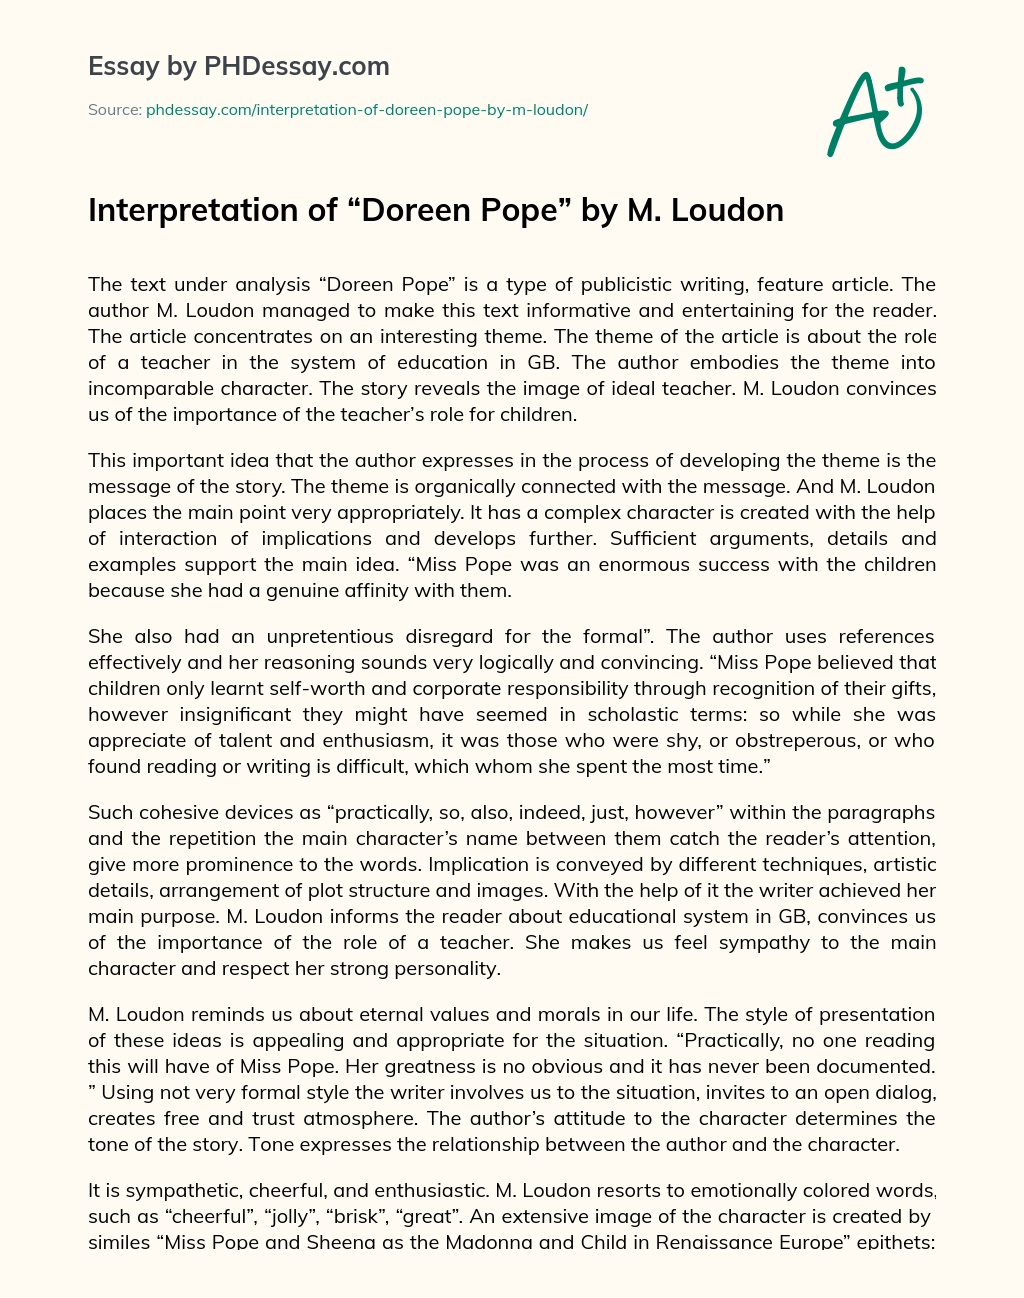 ﻿Interpretation of “Doreen Pope” by M. Loudon essay